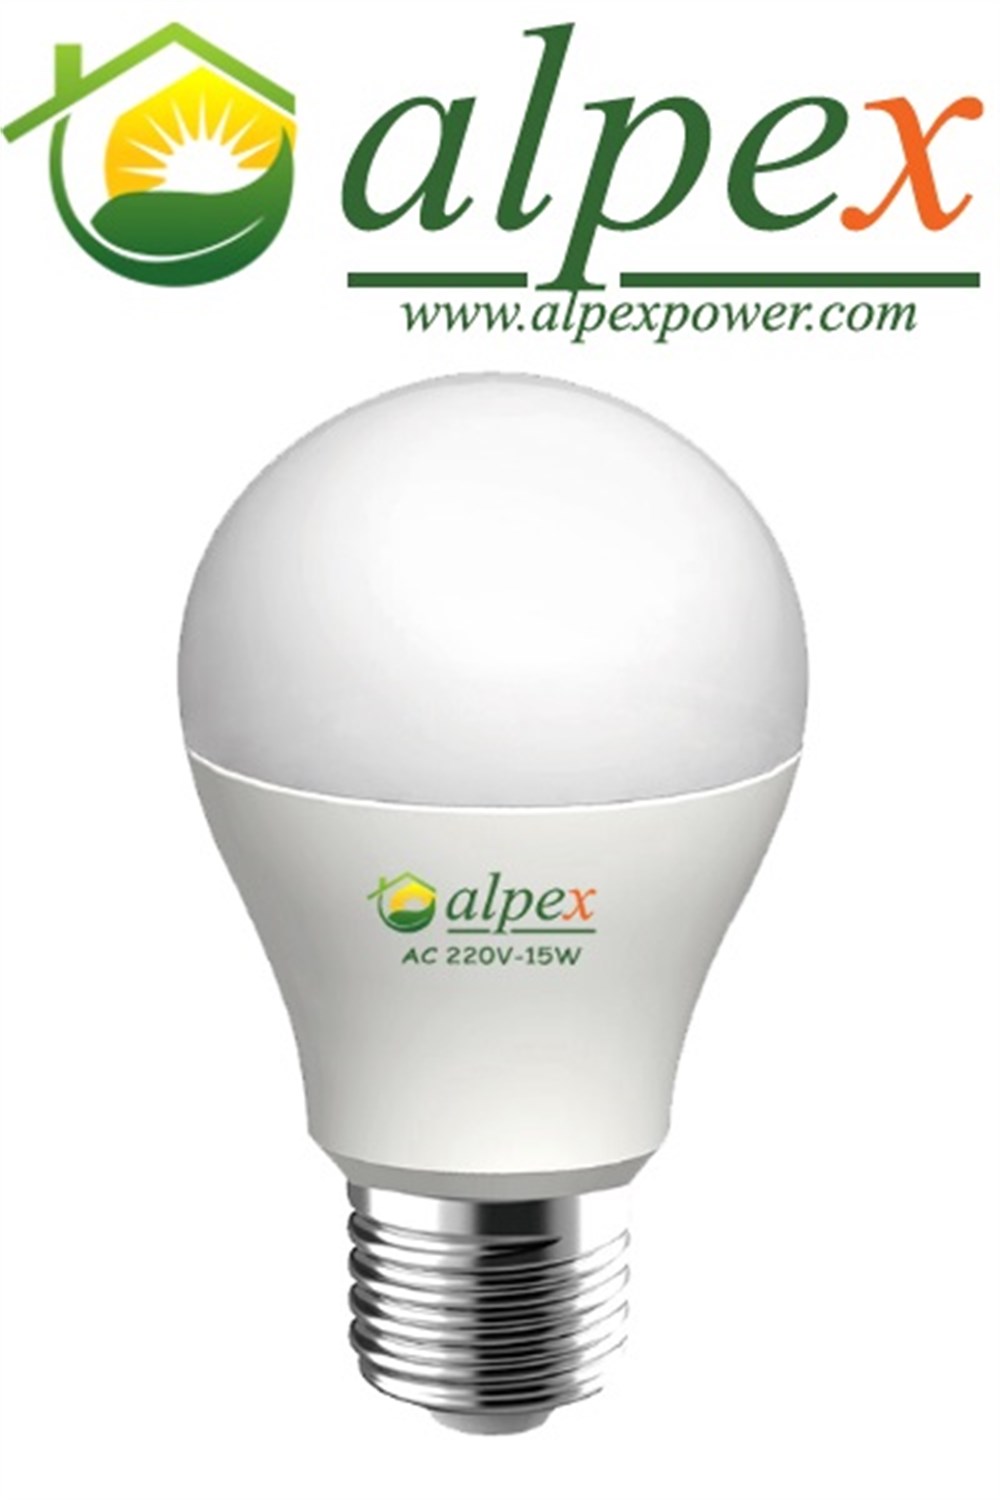 15 WATT 12 VOLT LED AMPUL - alpexpower.com Solar Enerji Marketiniz